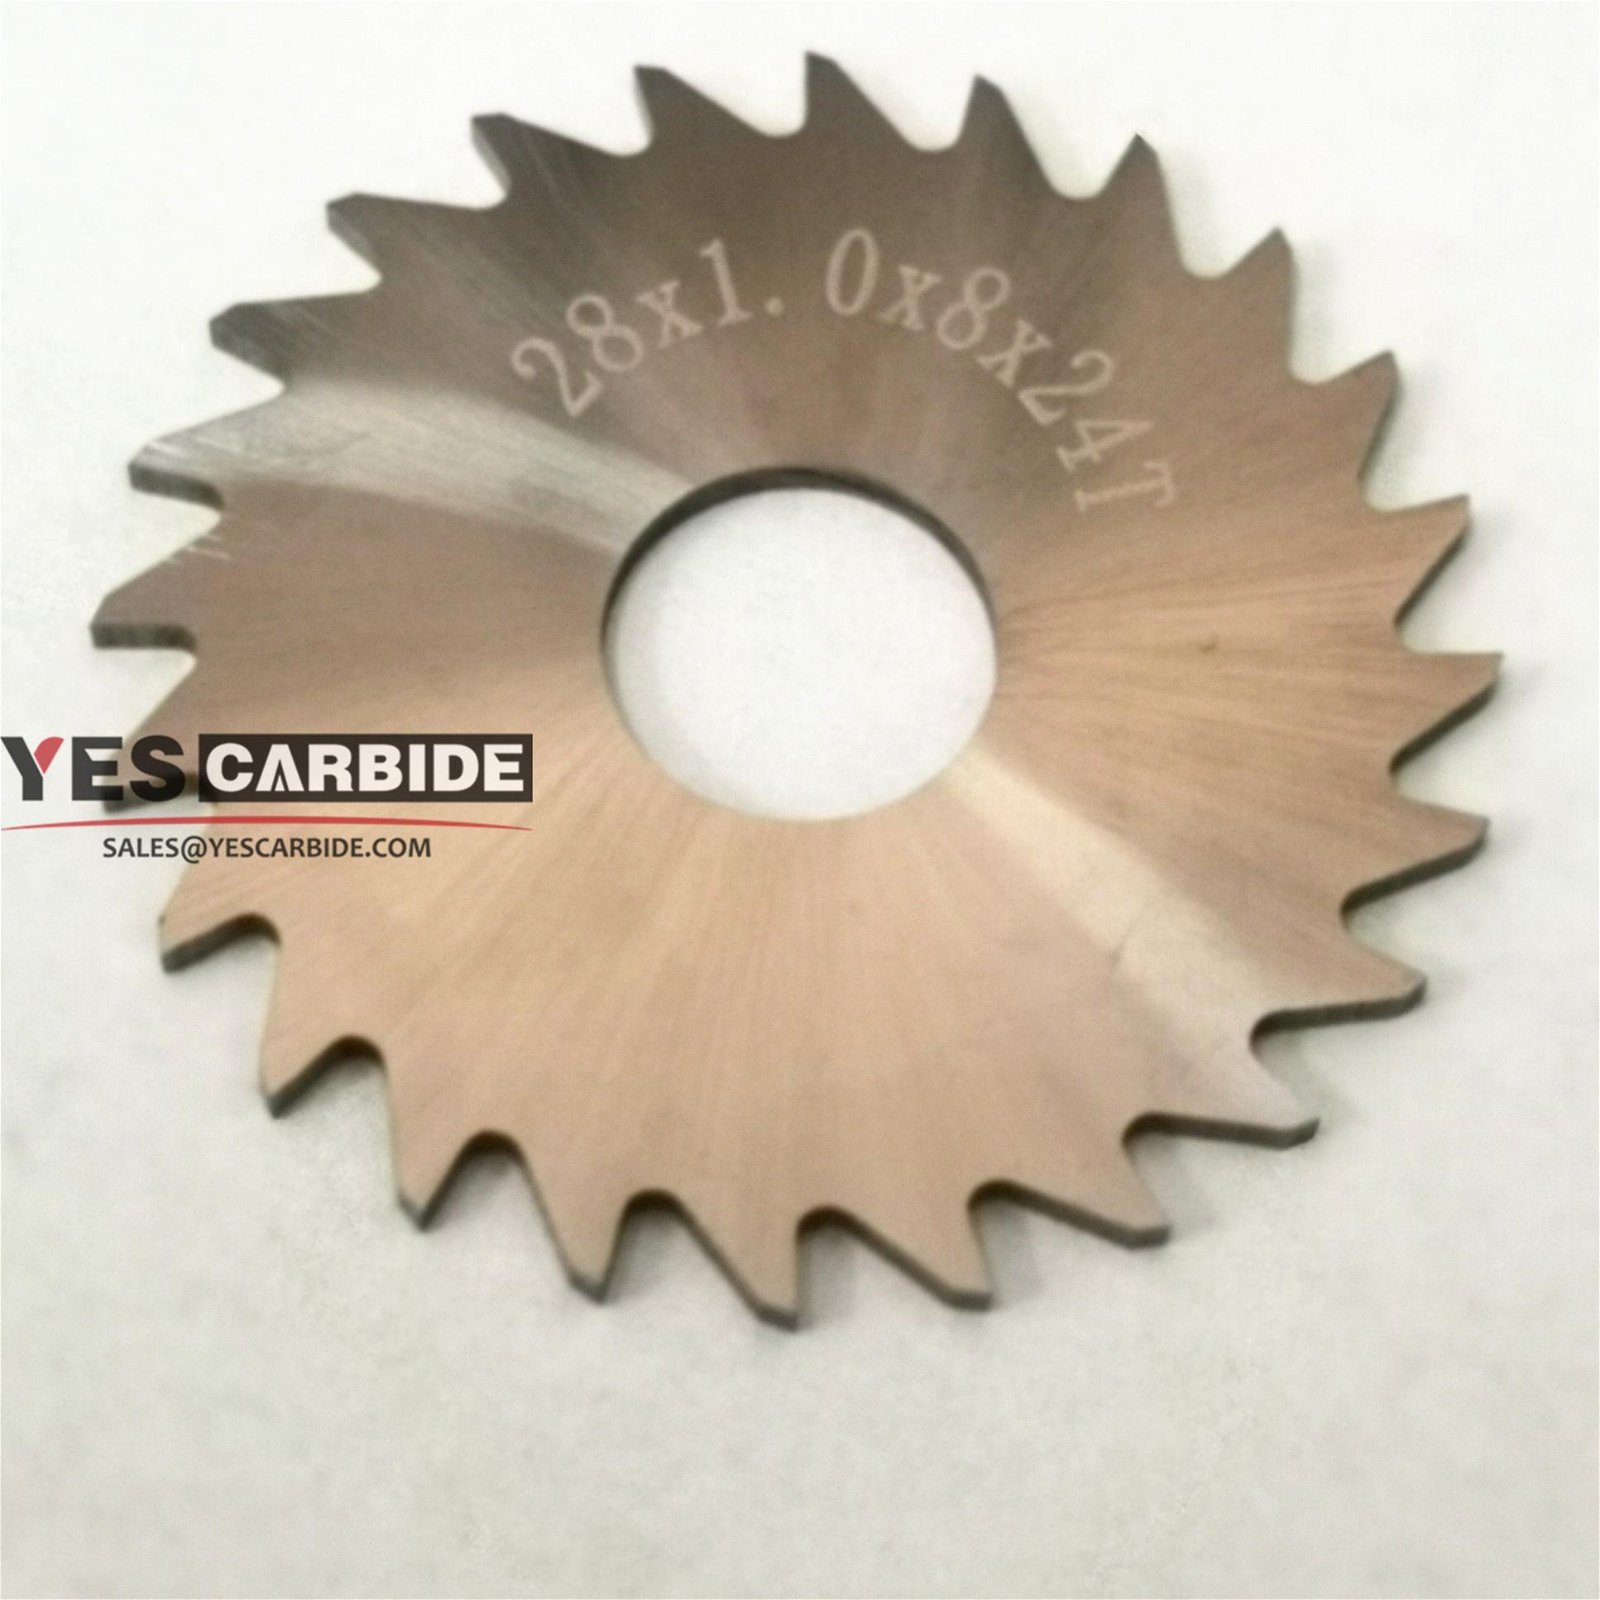 tungsten Cemented Carbide Circular disc Wheel Saw Blade Slitting Cutters